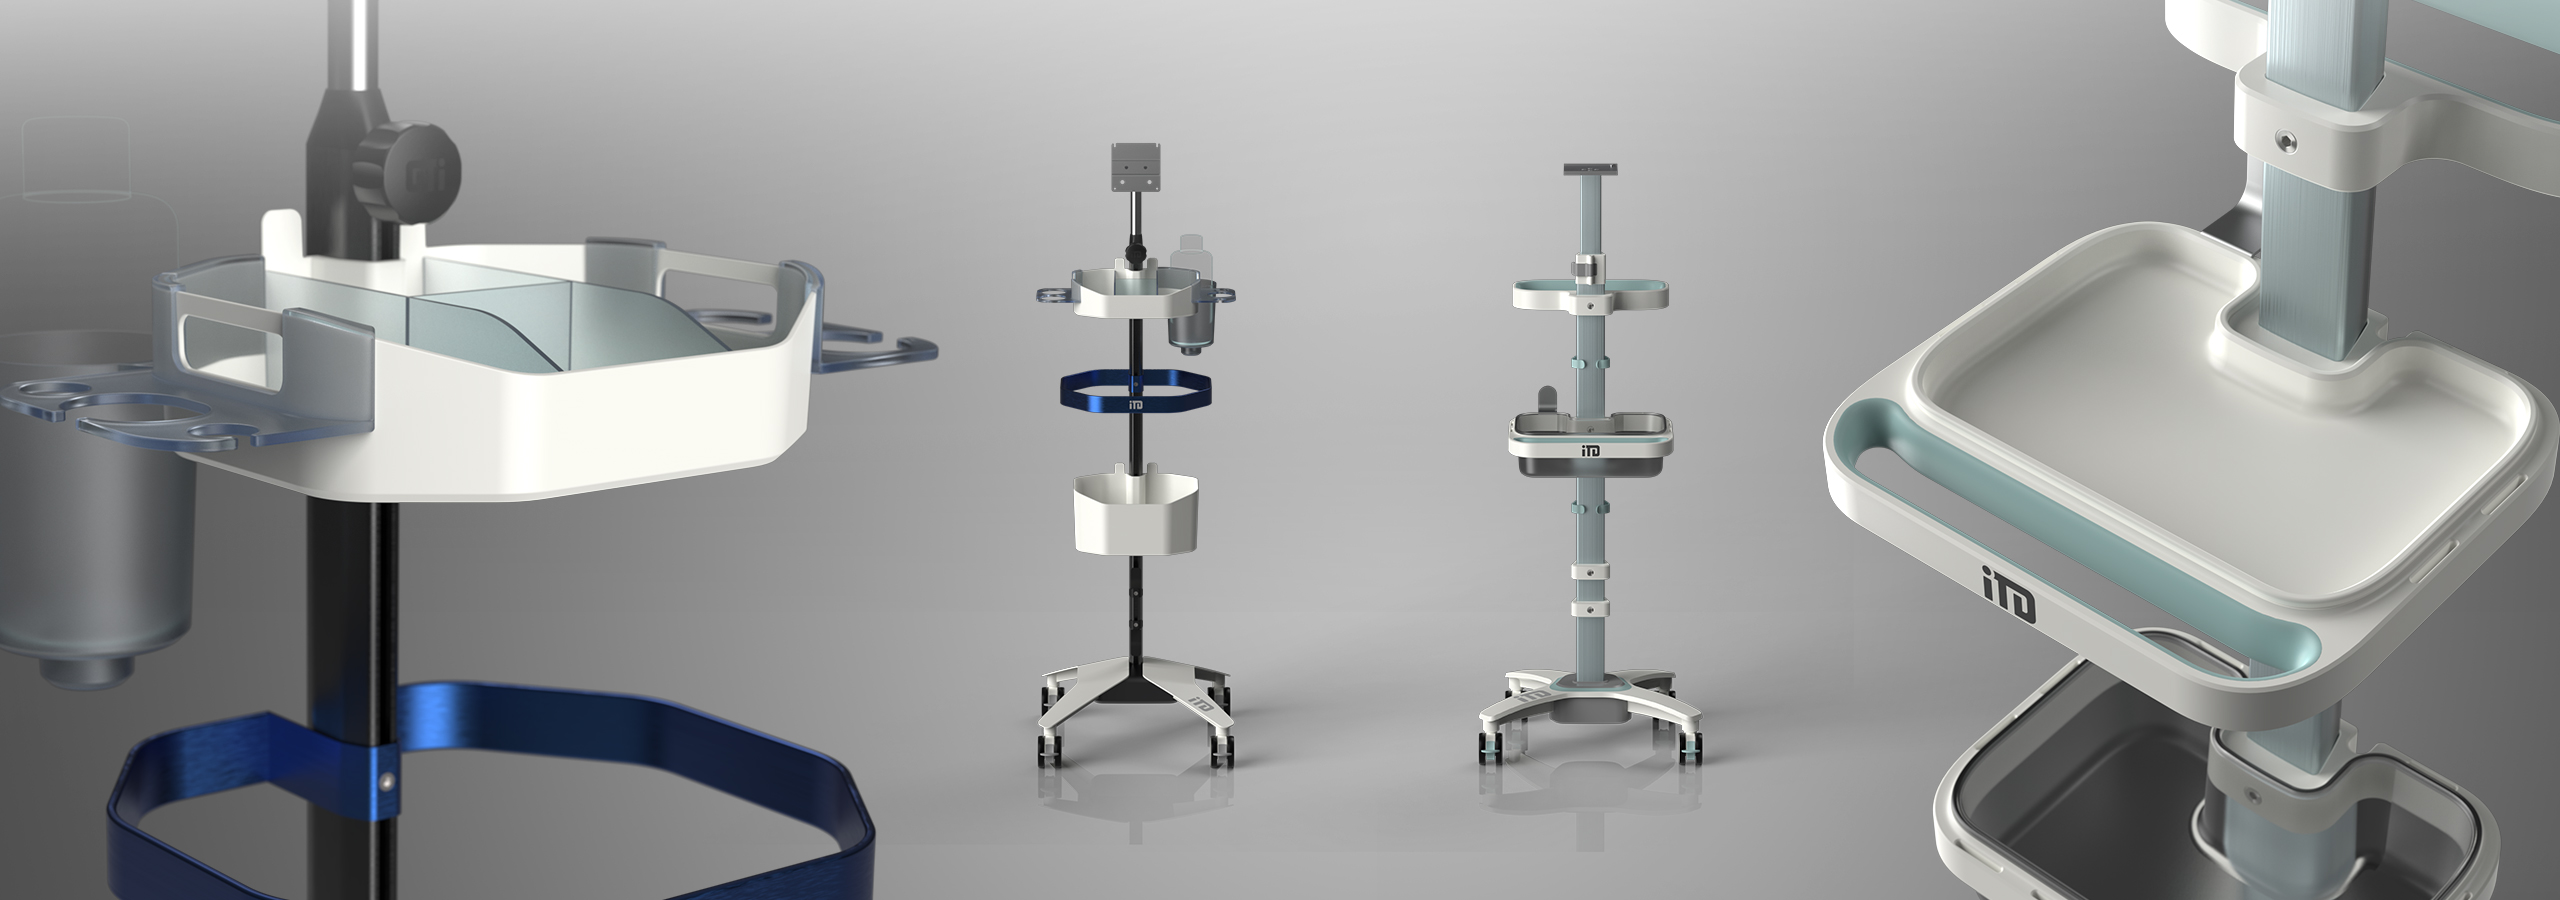 iTD Pitch Rollstand Entwurf Neo Projekter Industrial Design Duisburg 3D Modelierung Visualisierung Prototyping